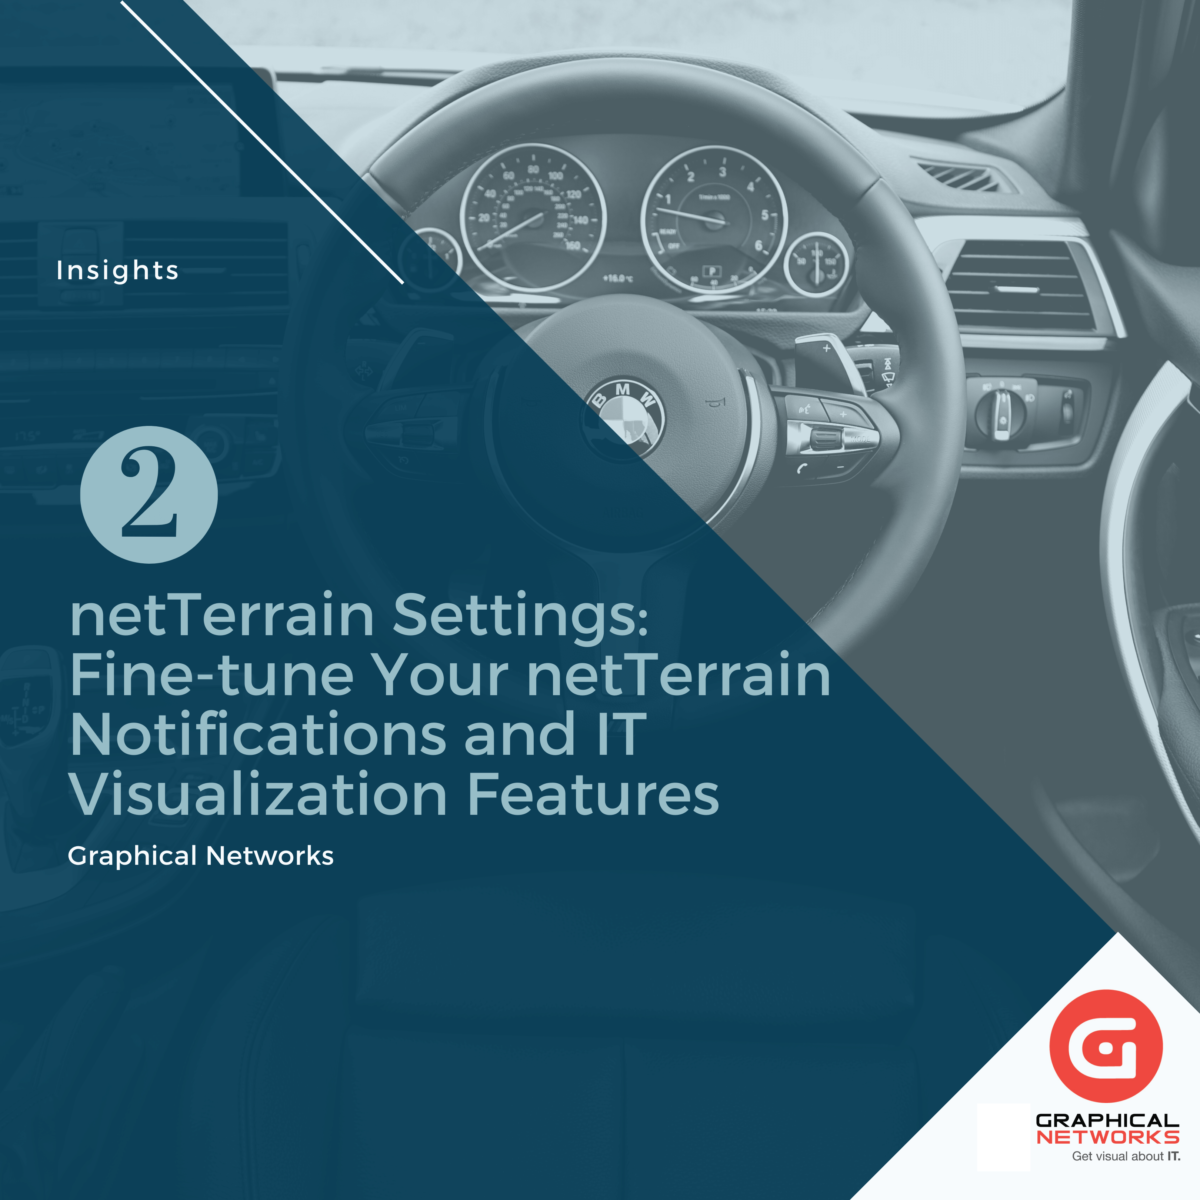 netTerrain Settings: Fine-tune netTerrain Notifications & Visualization Features